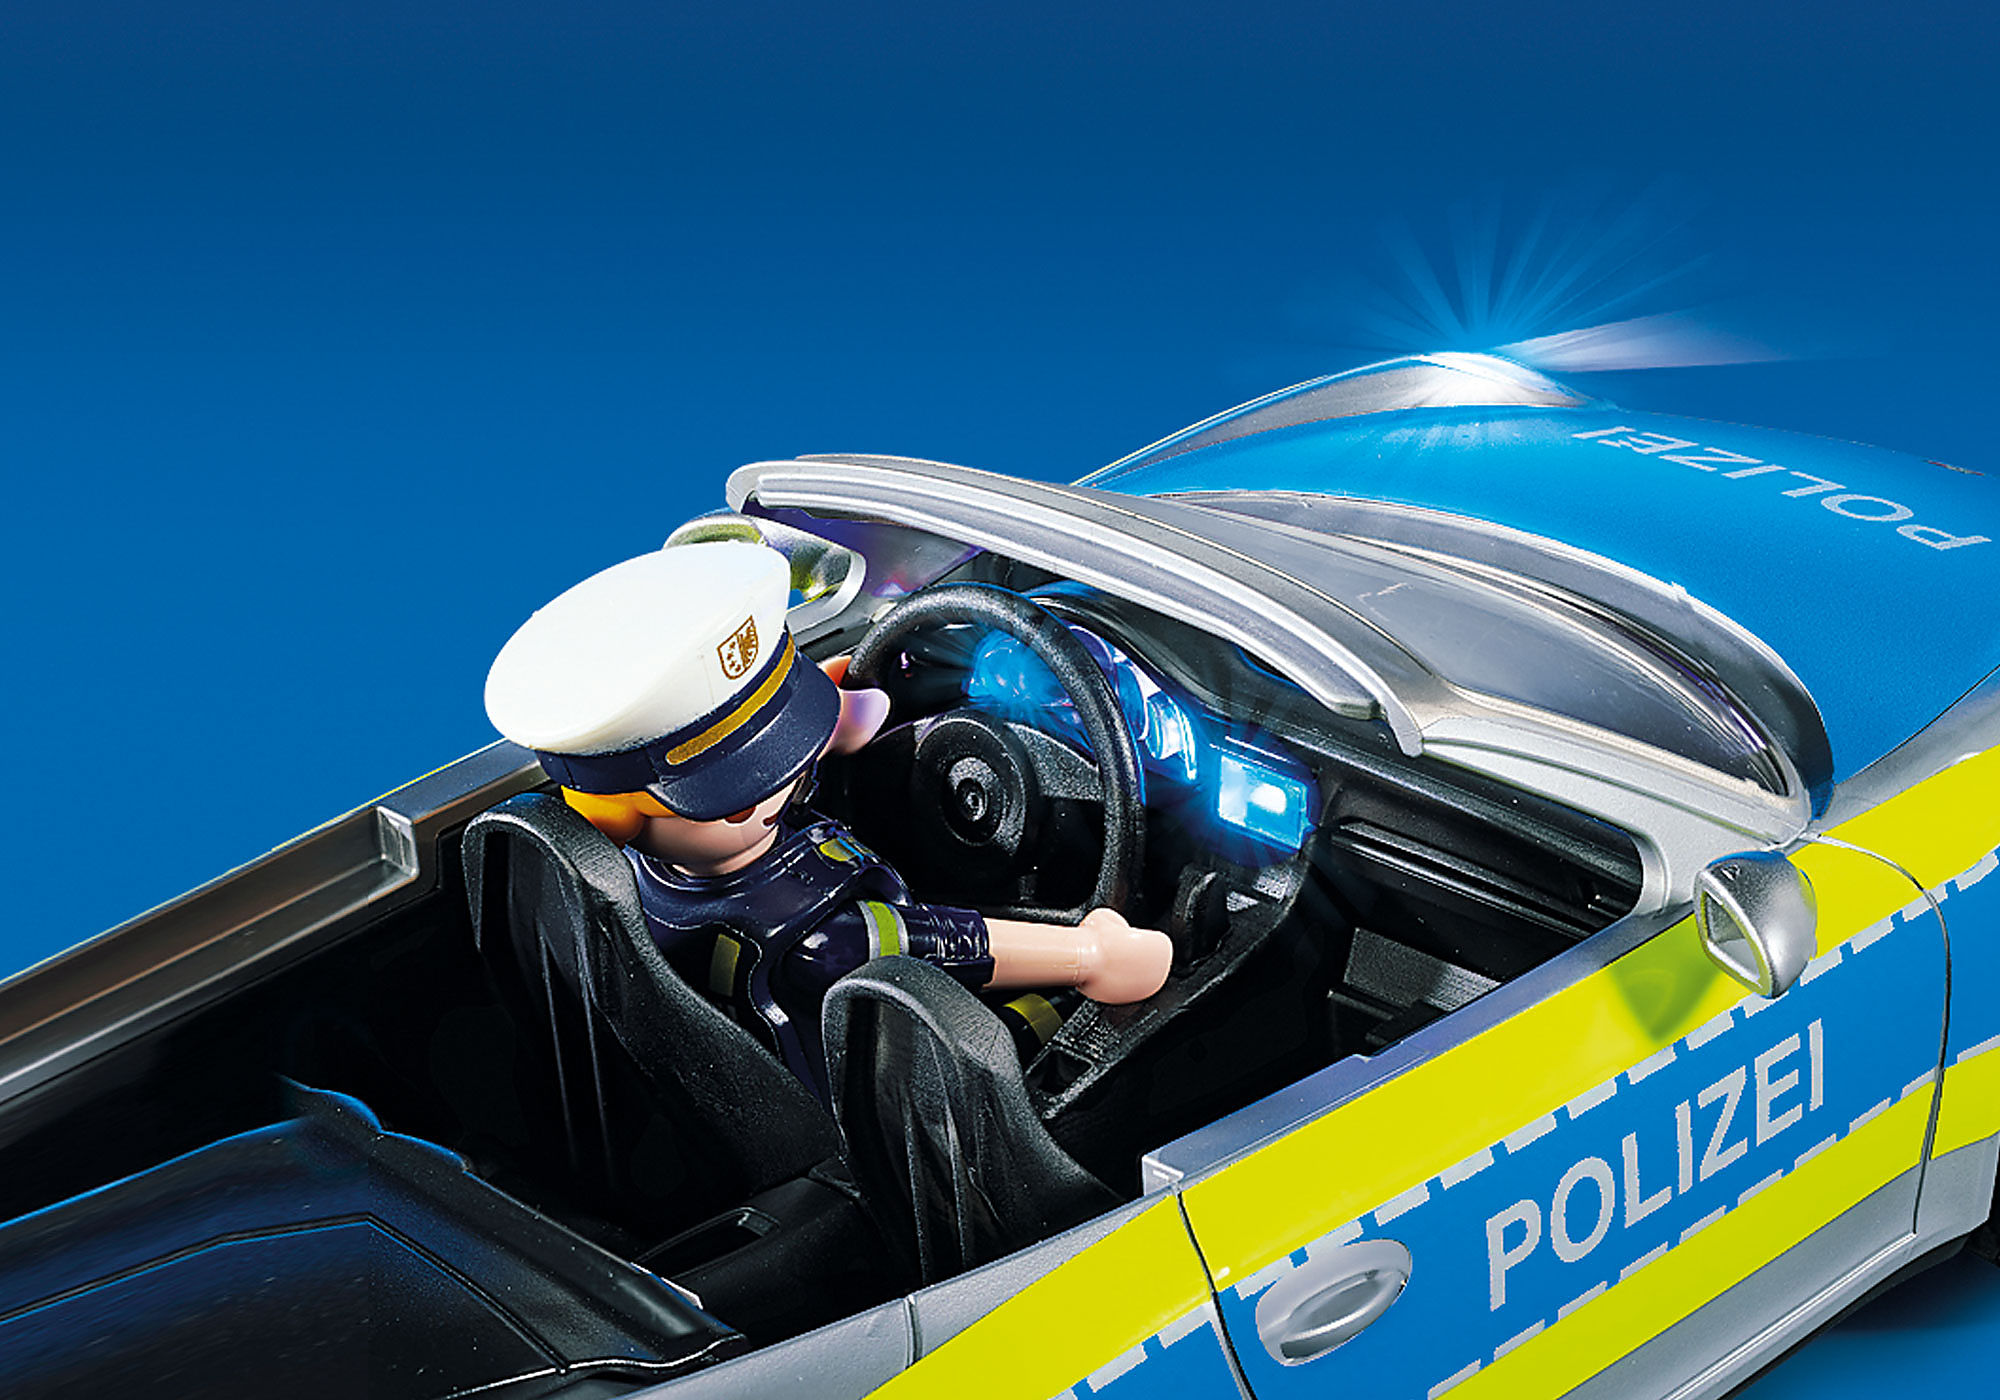 Porsche Carrera Polizei - 70067 | PLAYMOBIL®